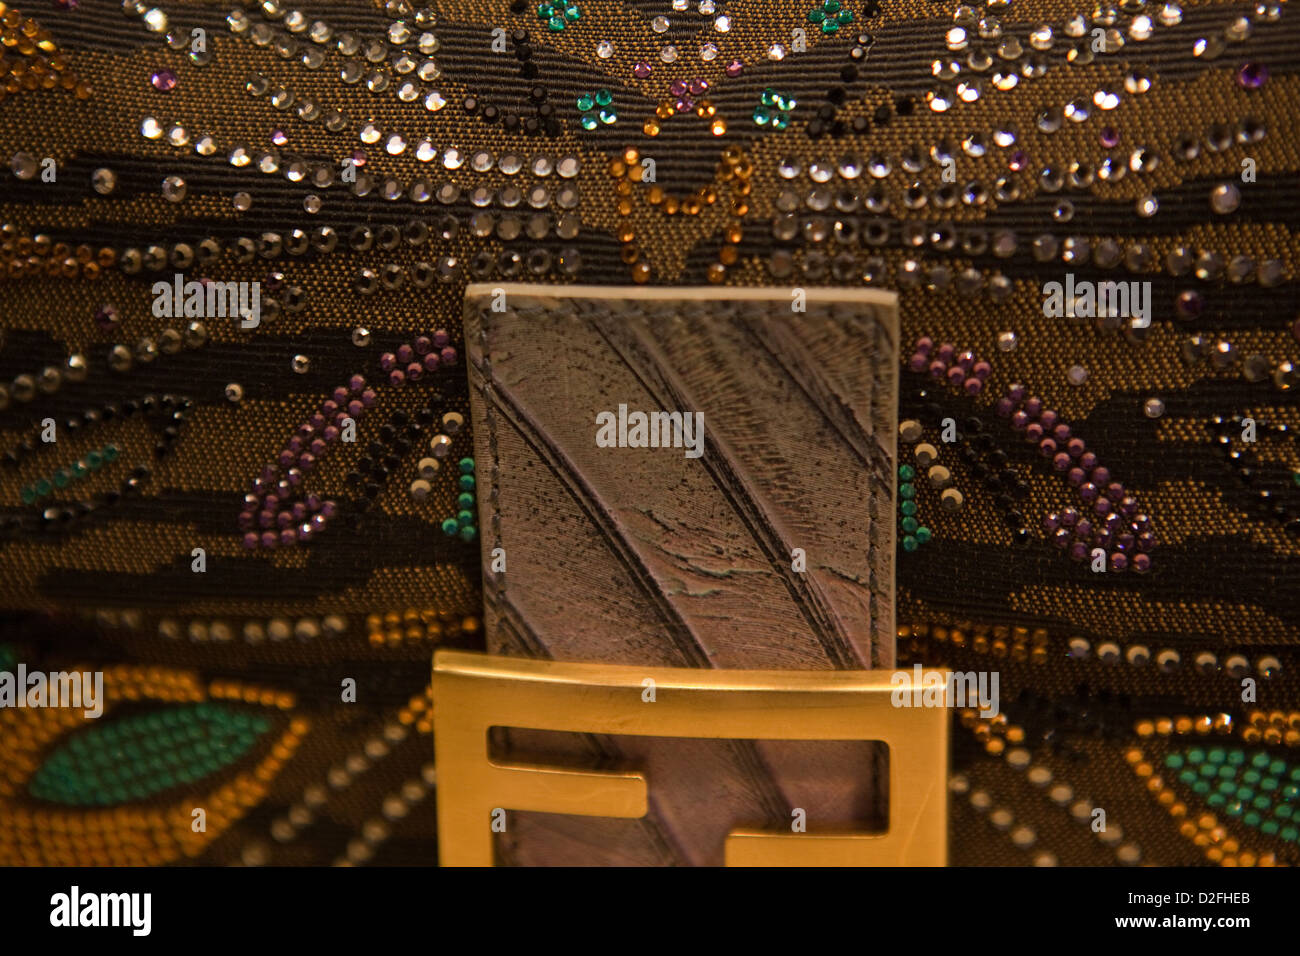 Kabelka fendi baguette hi-res stock photography and images - Alamy